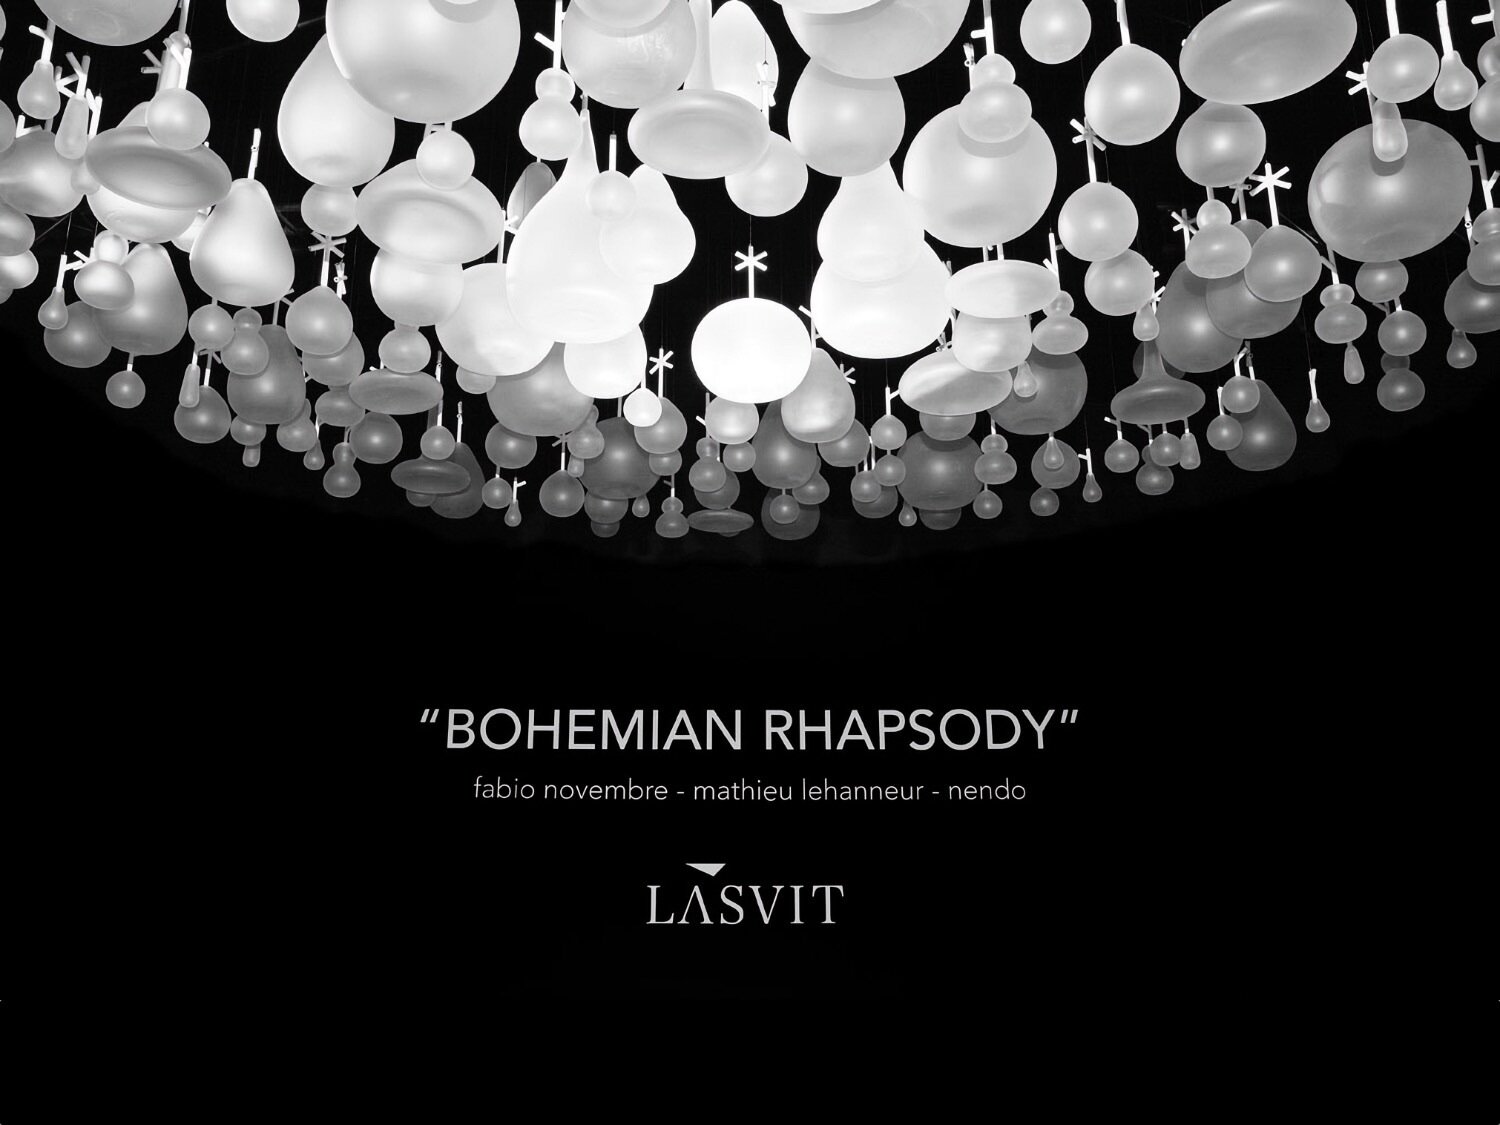  Bohemian Rhapsody
an installation for Lasvit
FuoriSalone, 2011
© photo by Pasquale Formisano 